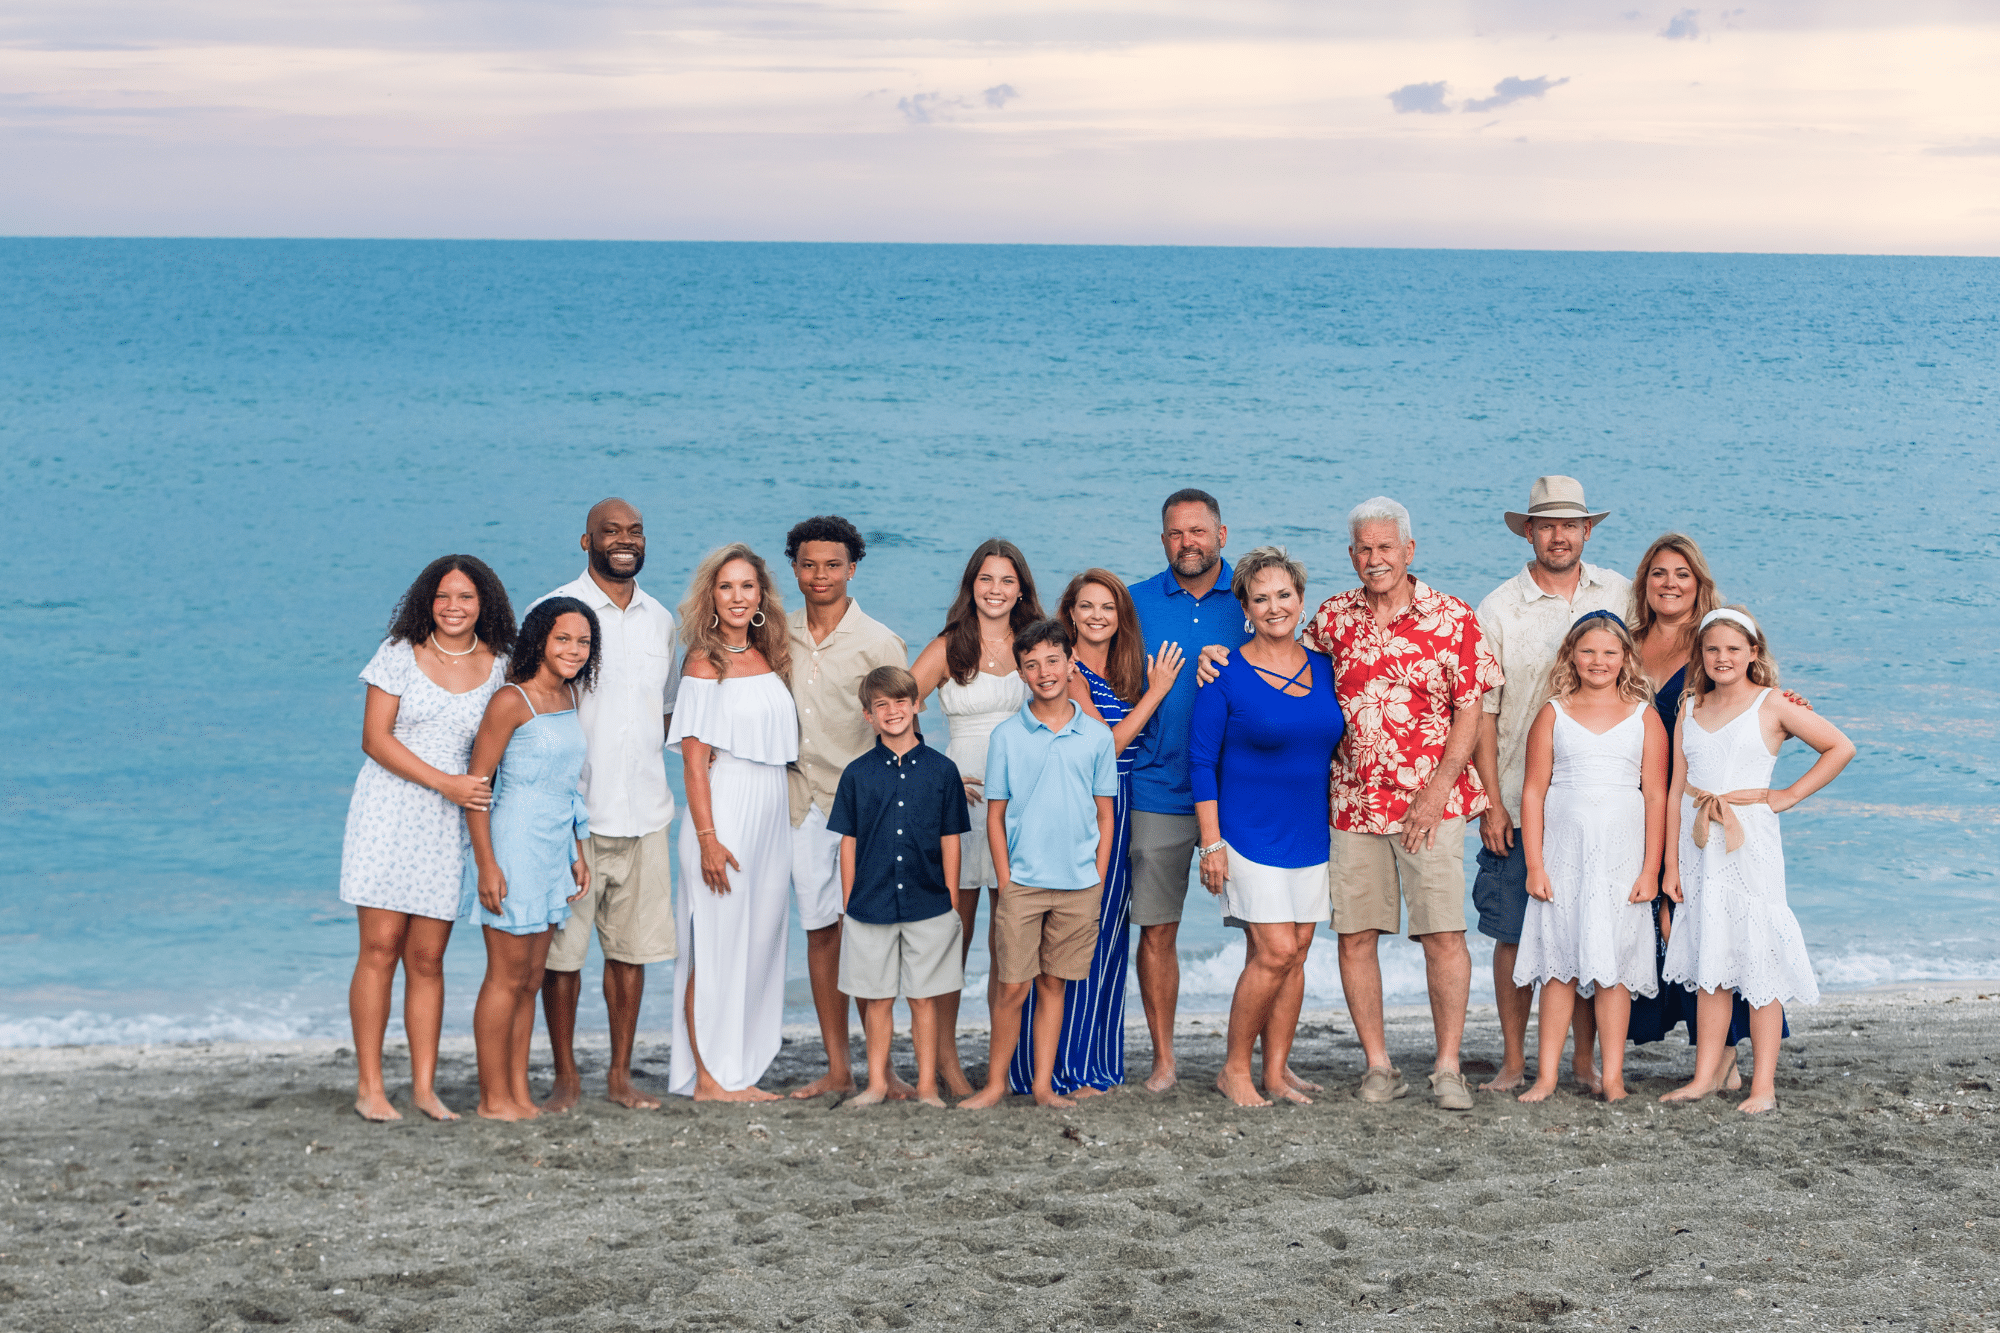 siesta key beach photographer captures extended family beach portrait in turtle beach